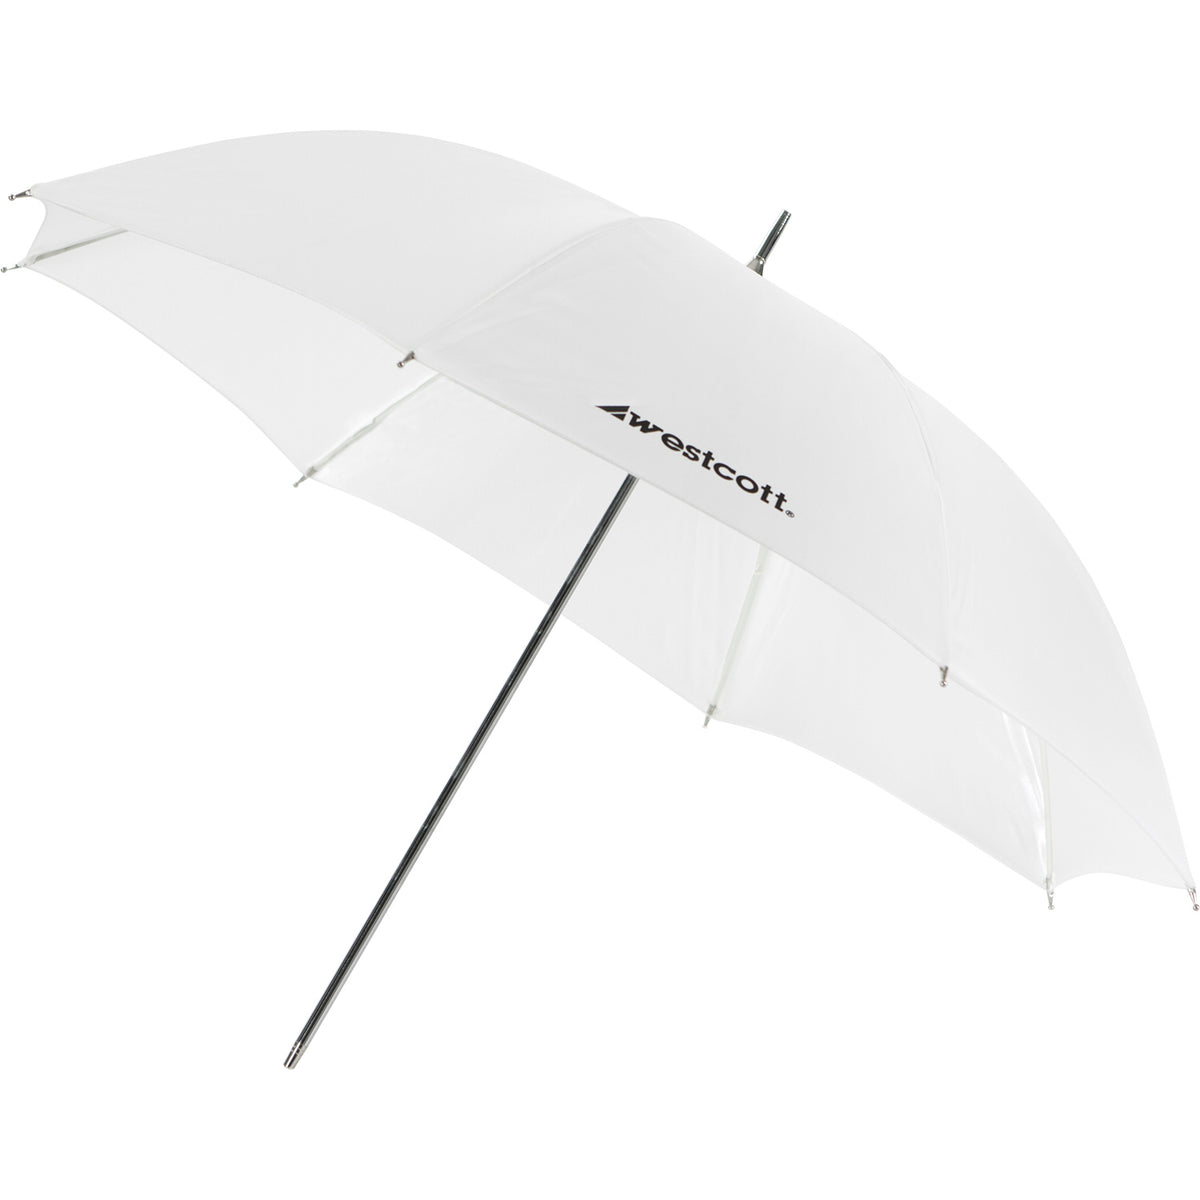 Standard Umbrella - Optical White Satin Diffusion (32")